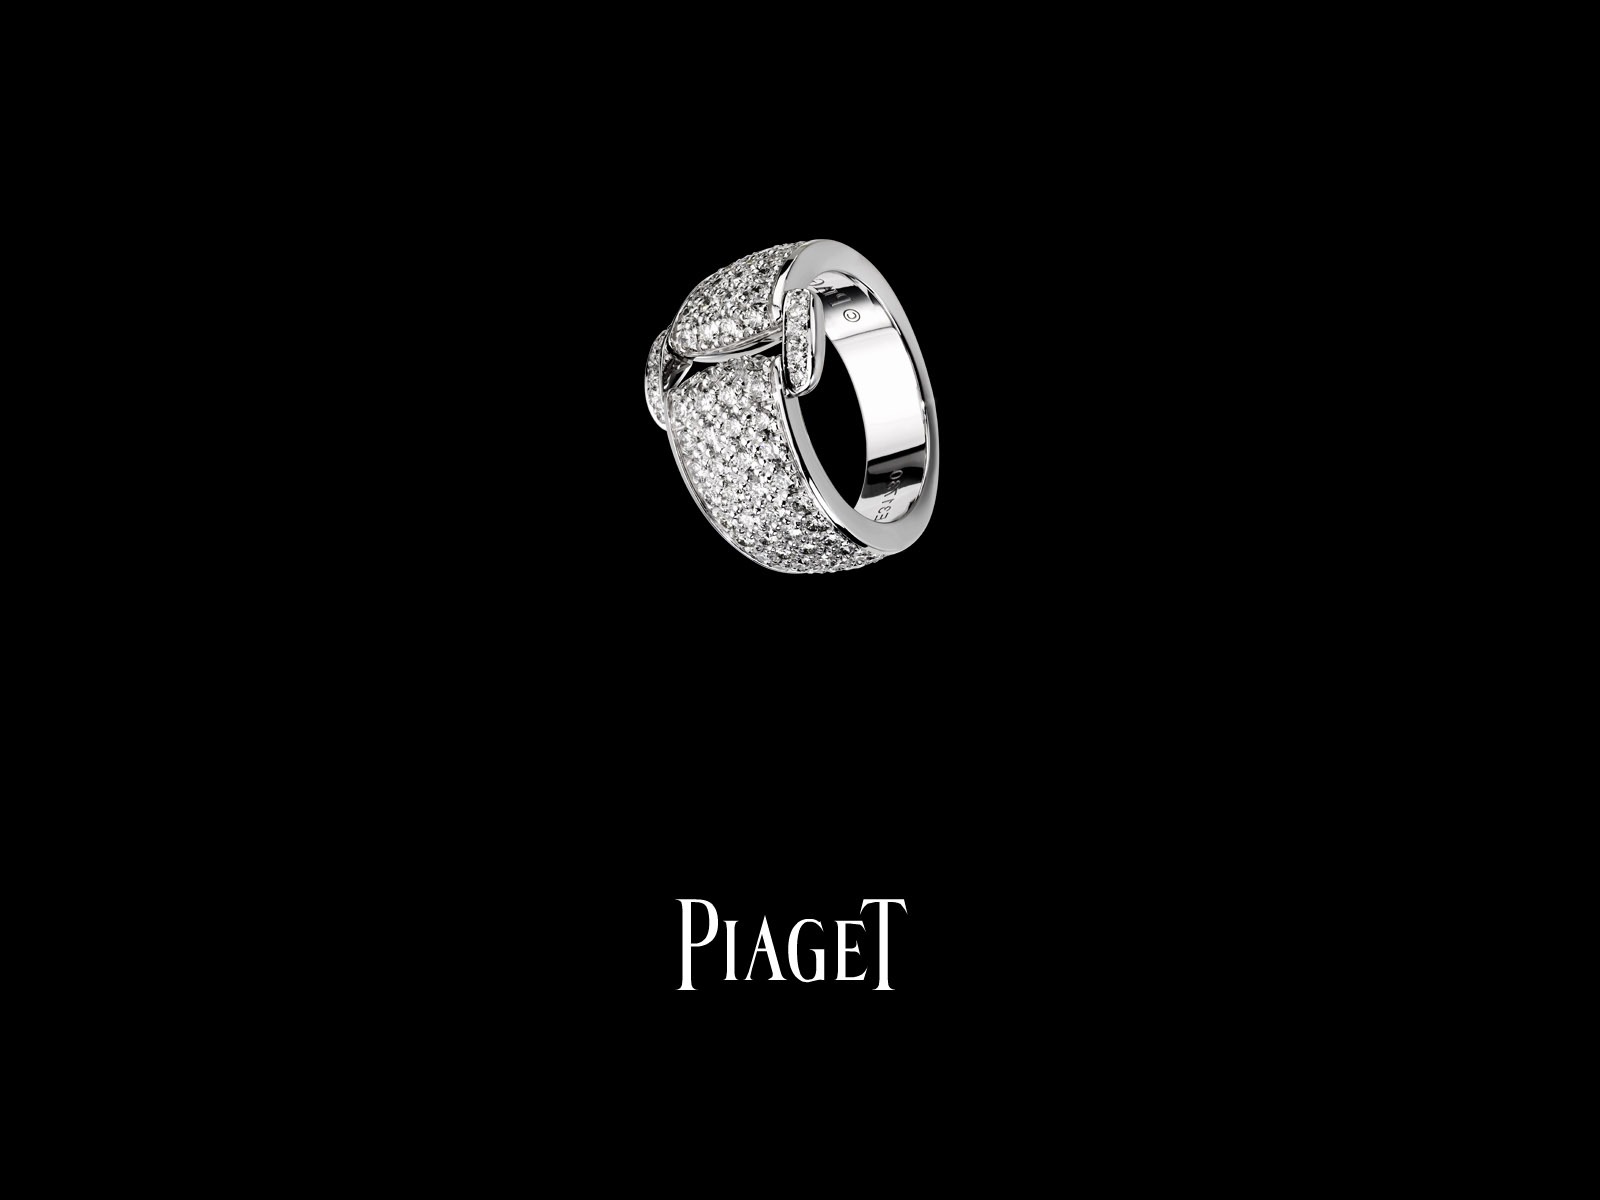 Piaget diamond jewelry wallpaper (4) #2 - 1600x1200